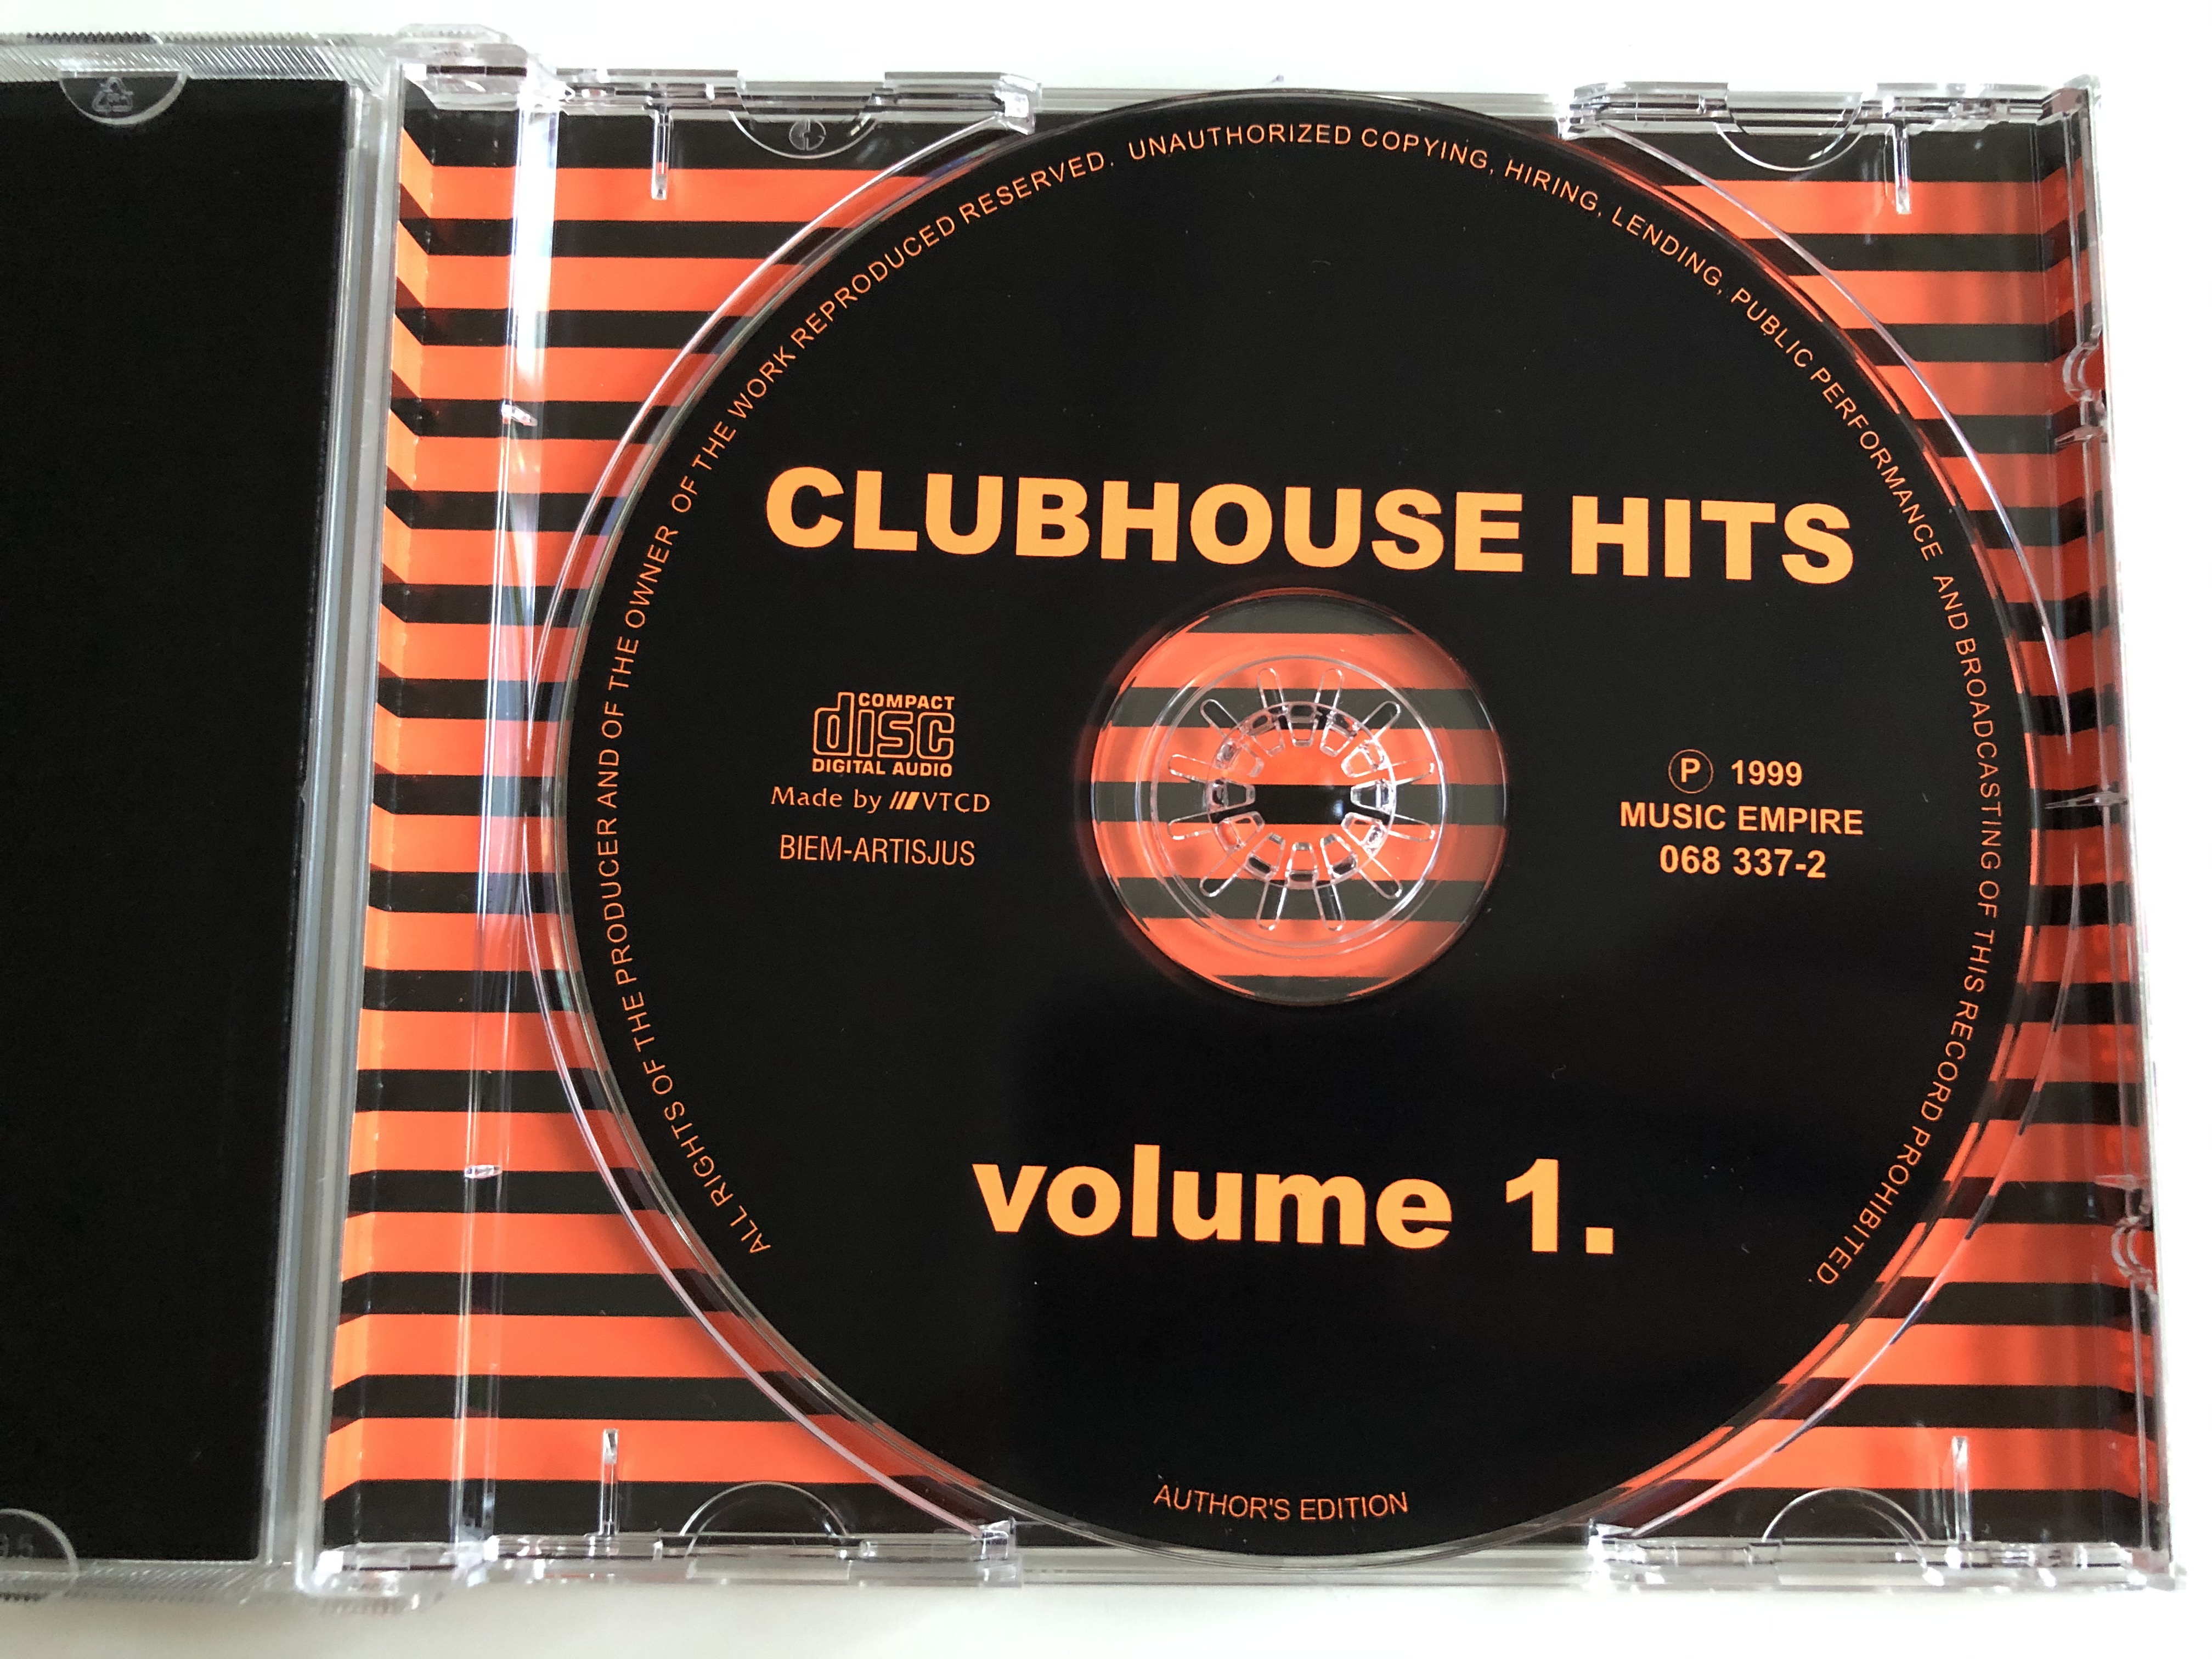 clubhouse-hits-volume-1.-music-empire-audio-cd-1999-068-337-2-4-.jpg